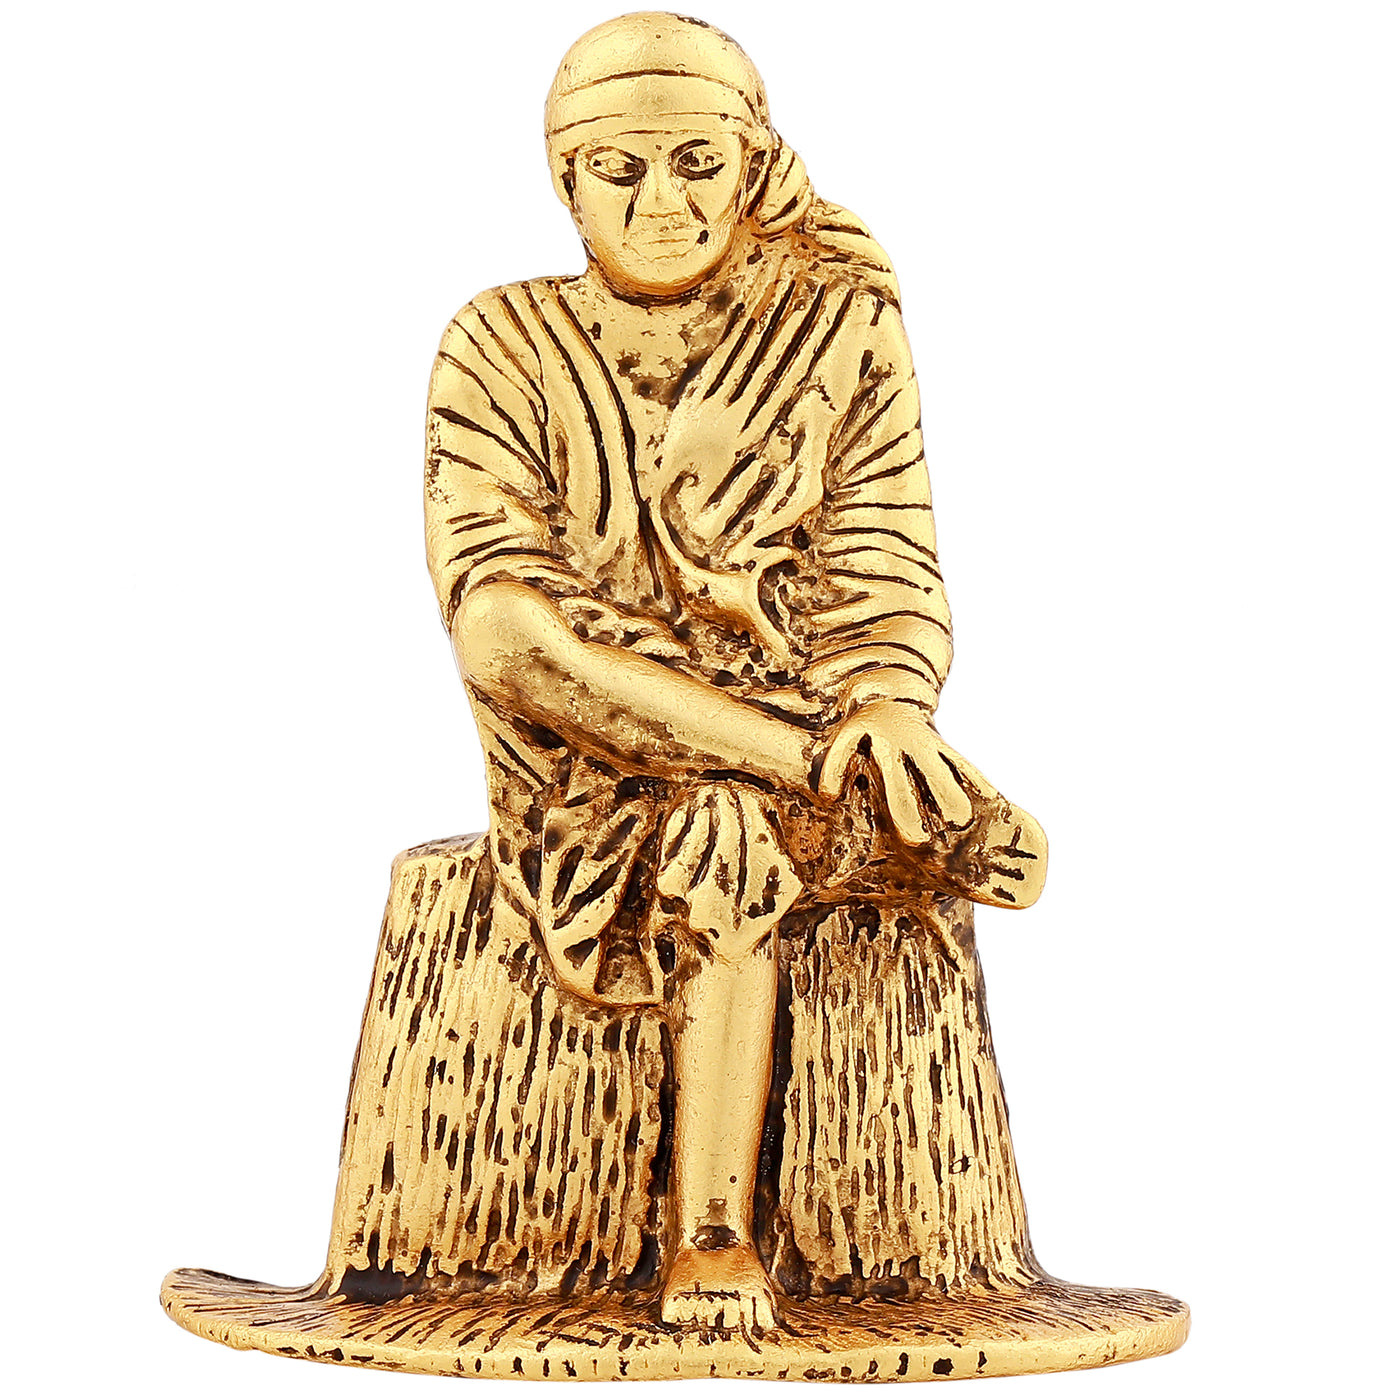 Estele Gold Plated Lord Sai Baba Idol (01-DGA)